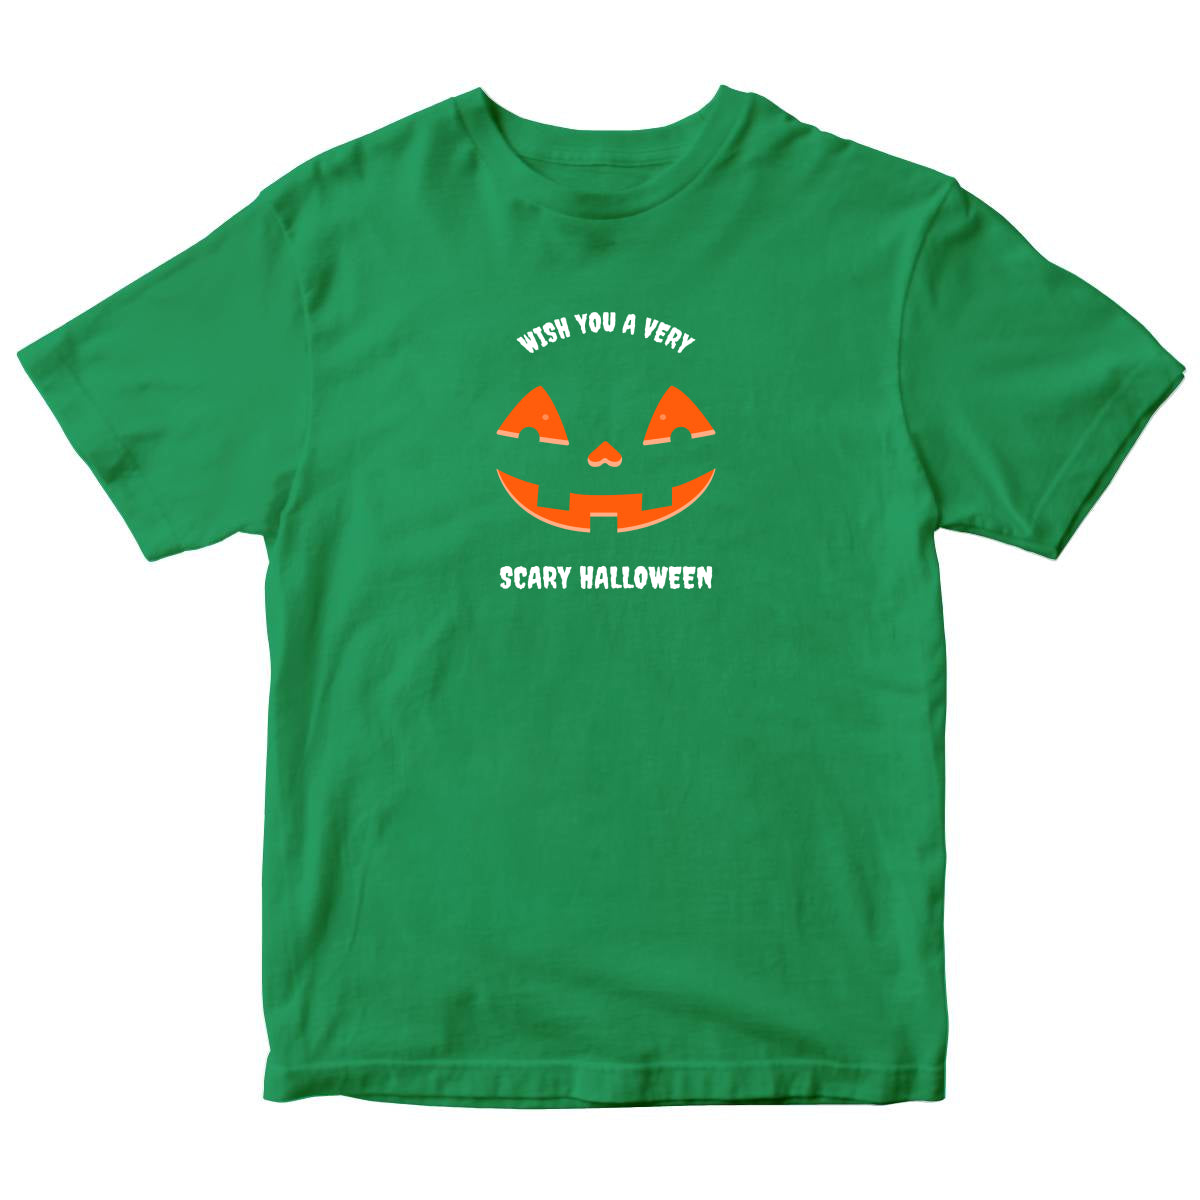 Wish You a Very Scary Halloween Kids T-shirt